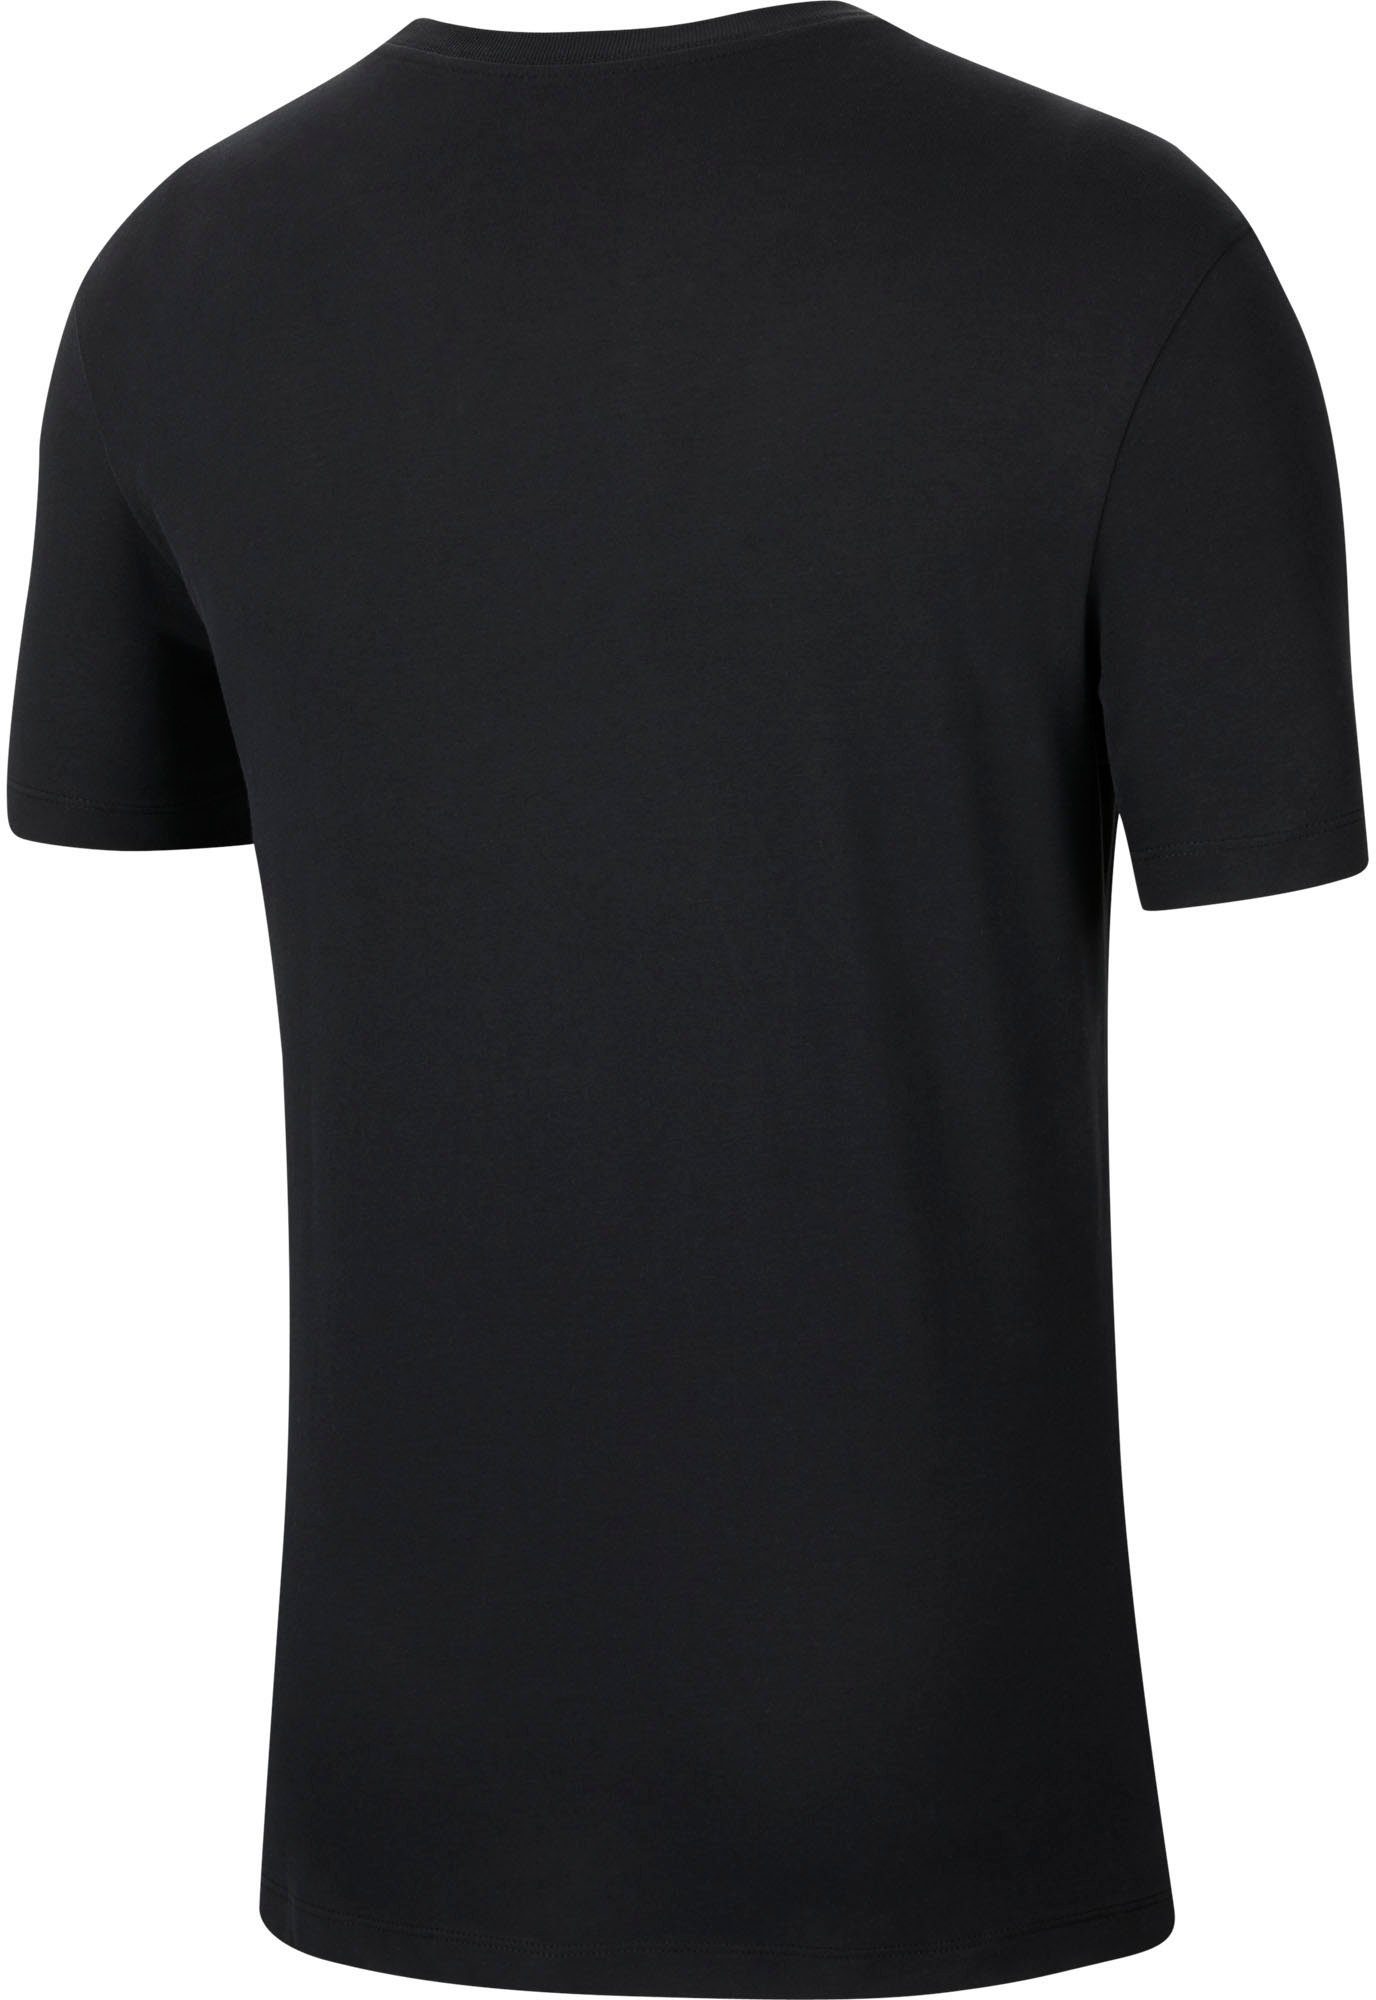 Nike Trainingsshirt Dri-FIT T-Shirt schwarz Men's Training Swoosh